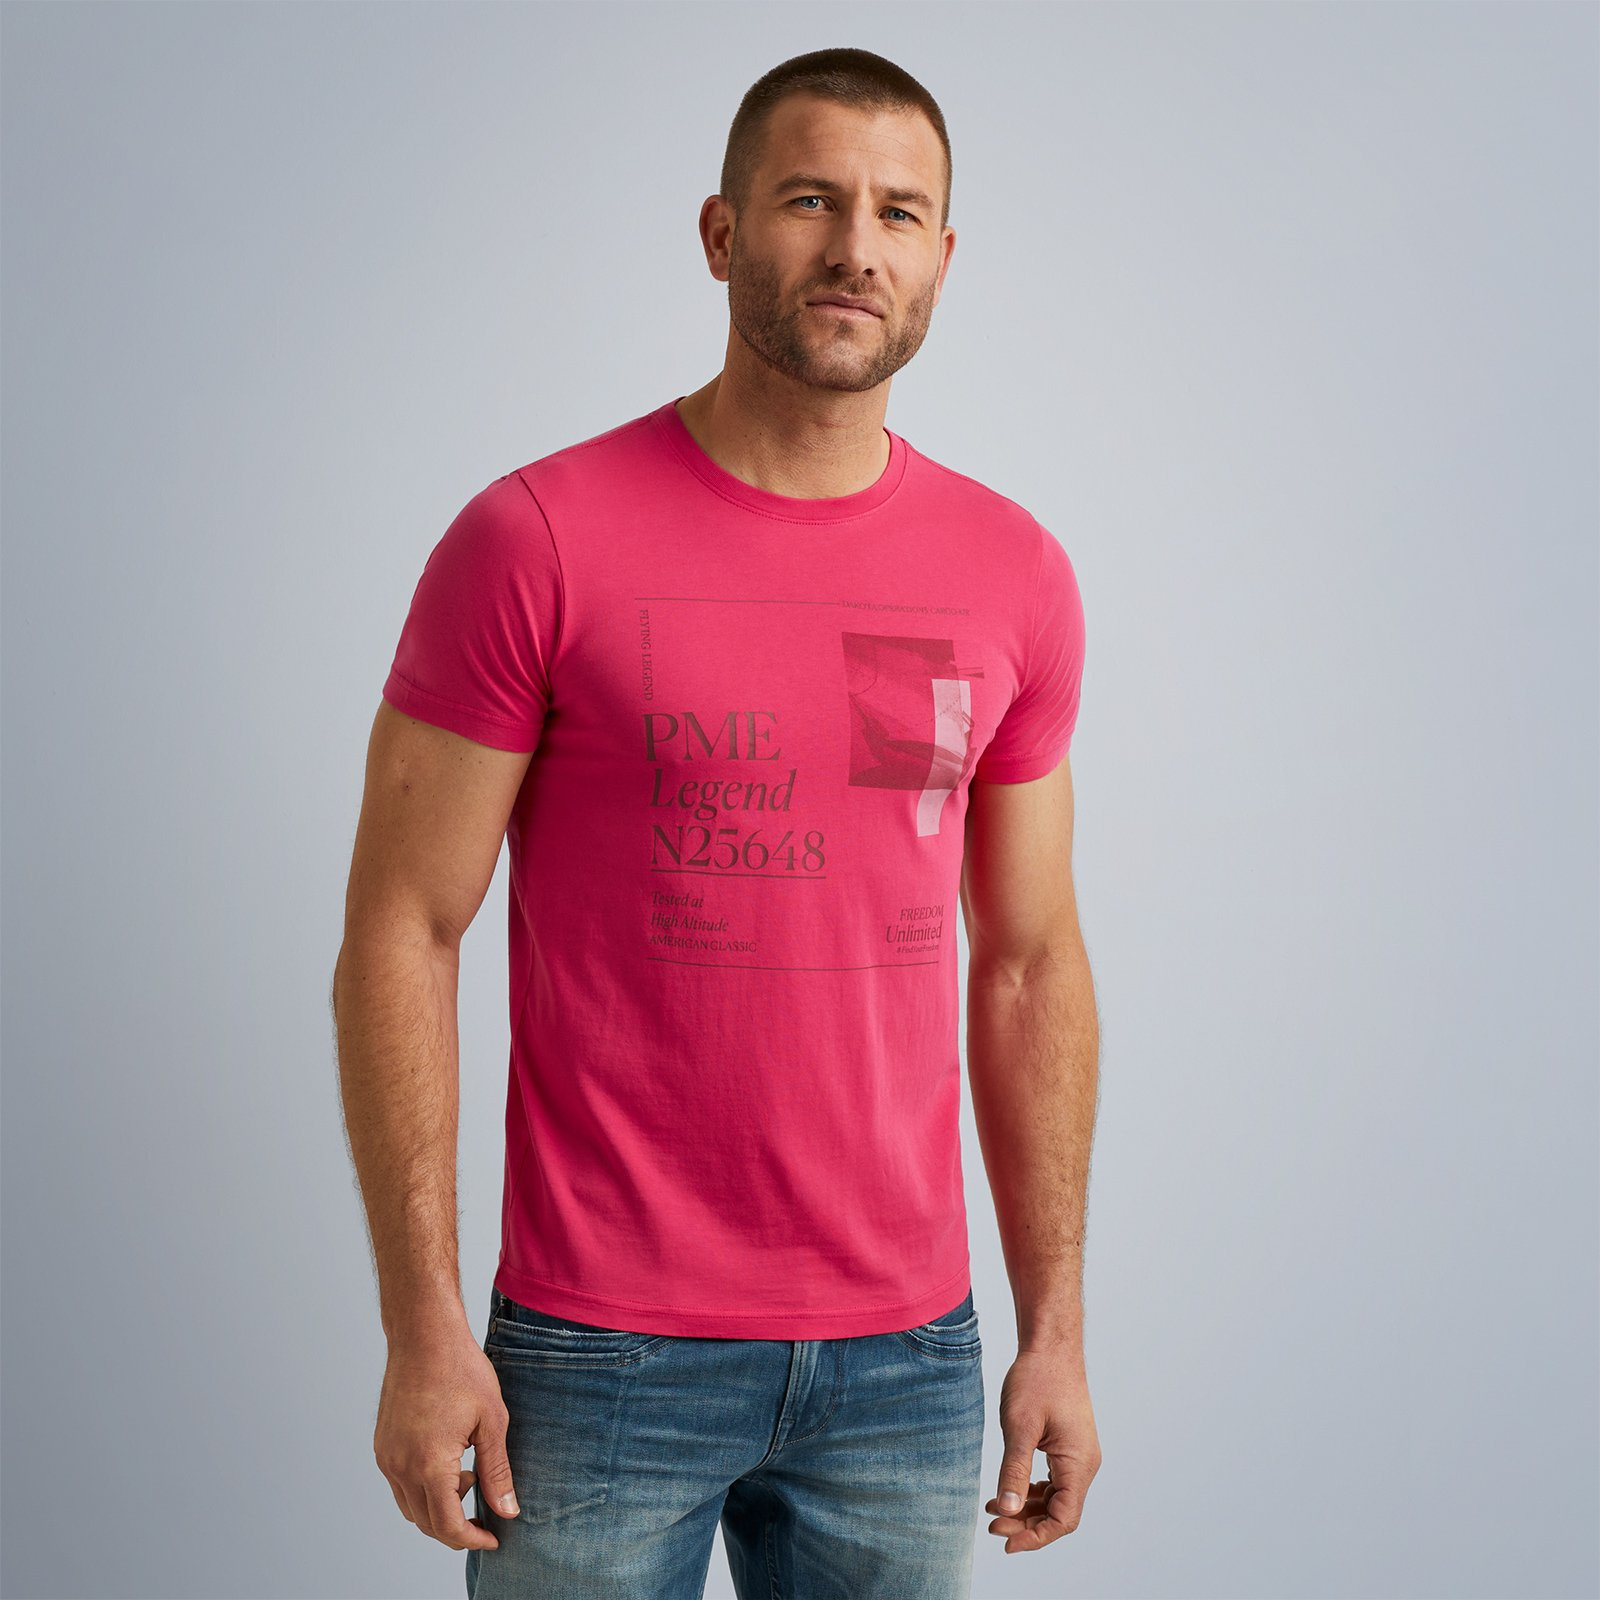 Cater Afleiding Prik PME Legend T-Shirt PTSS2305587 - 3129 - Greenfield Fashion